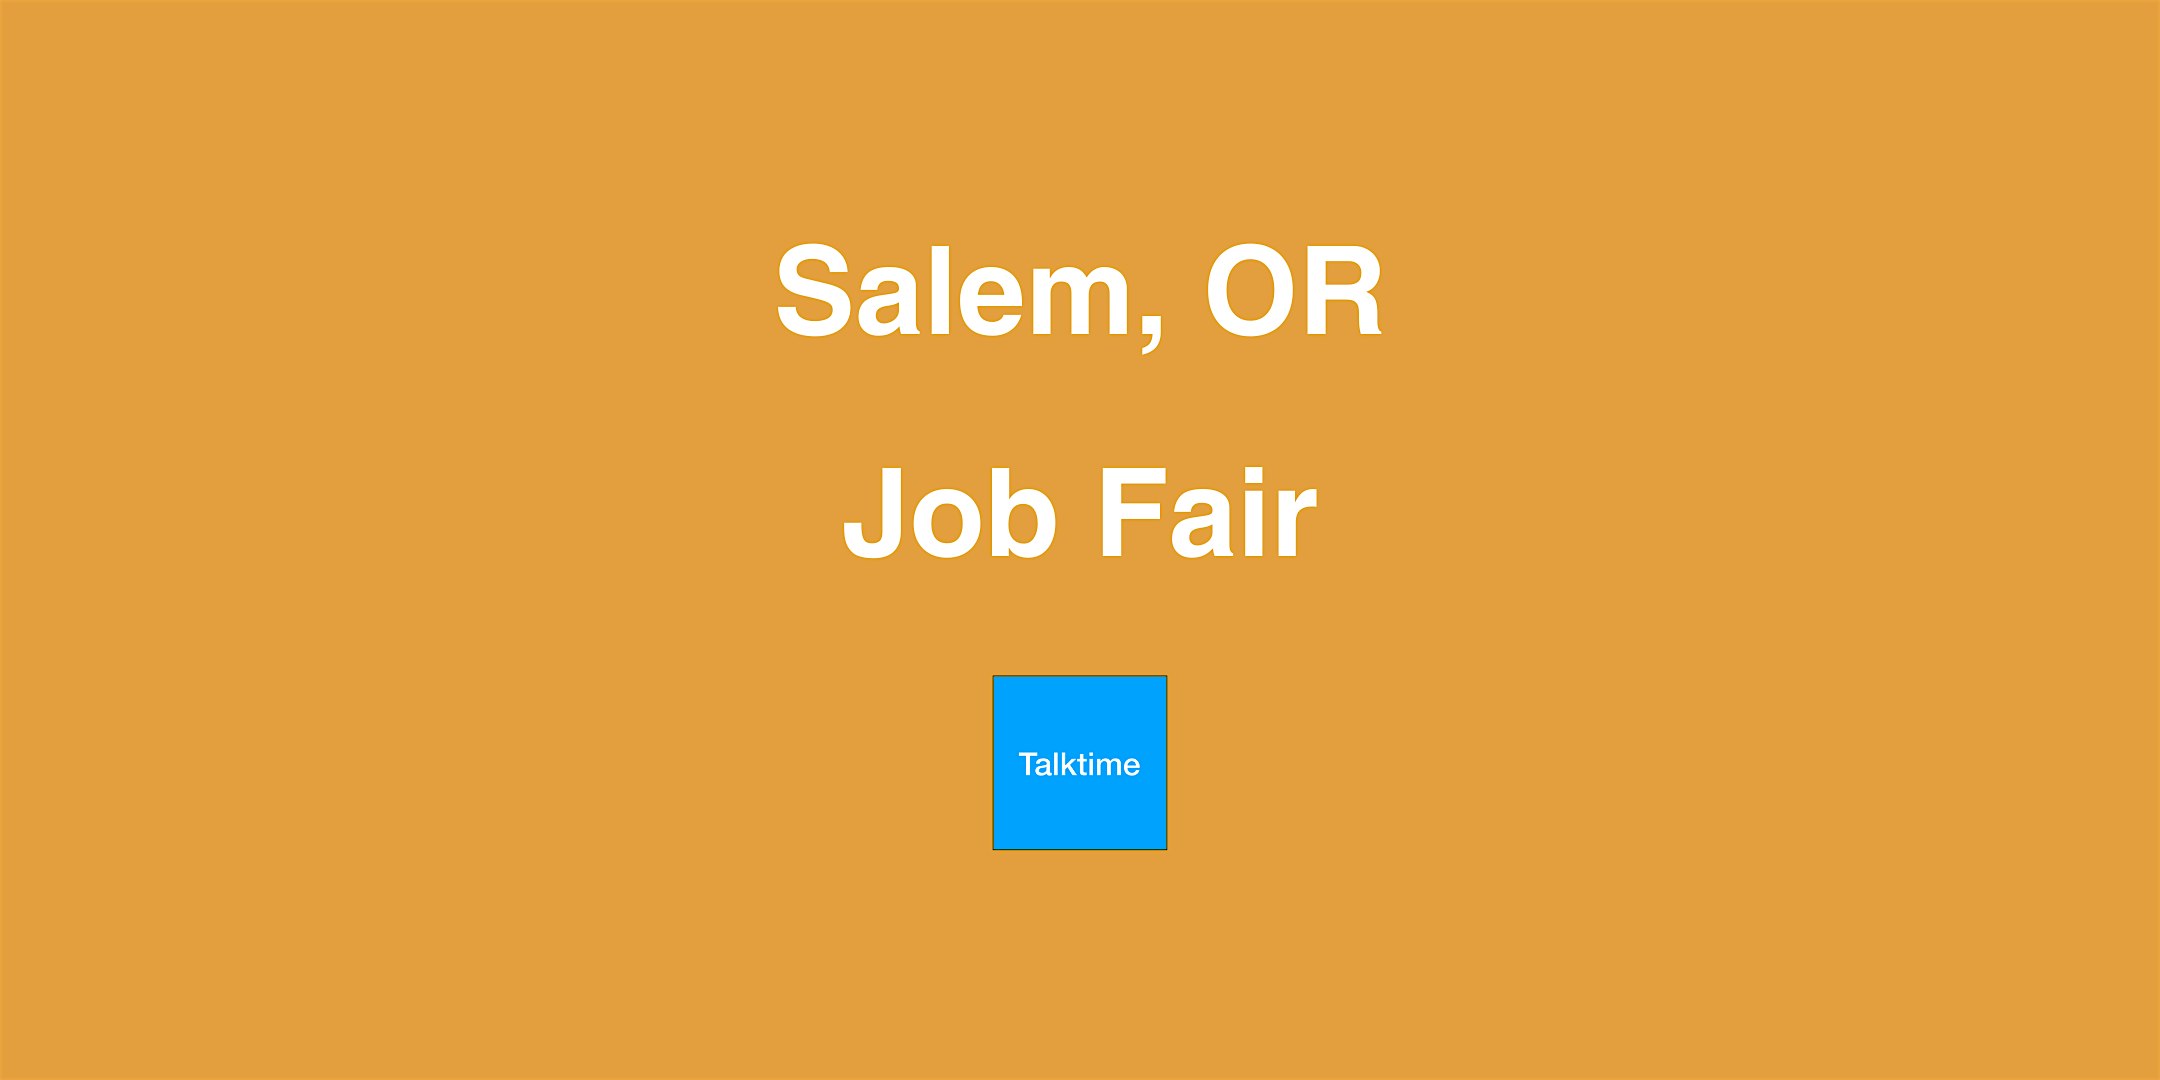 Job Fair - Salem